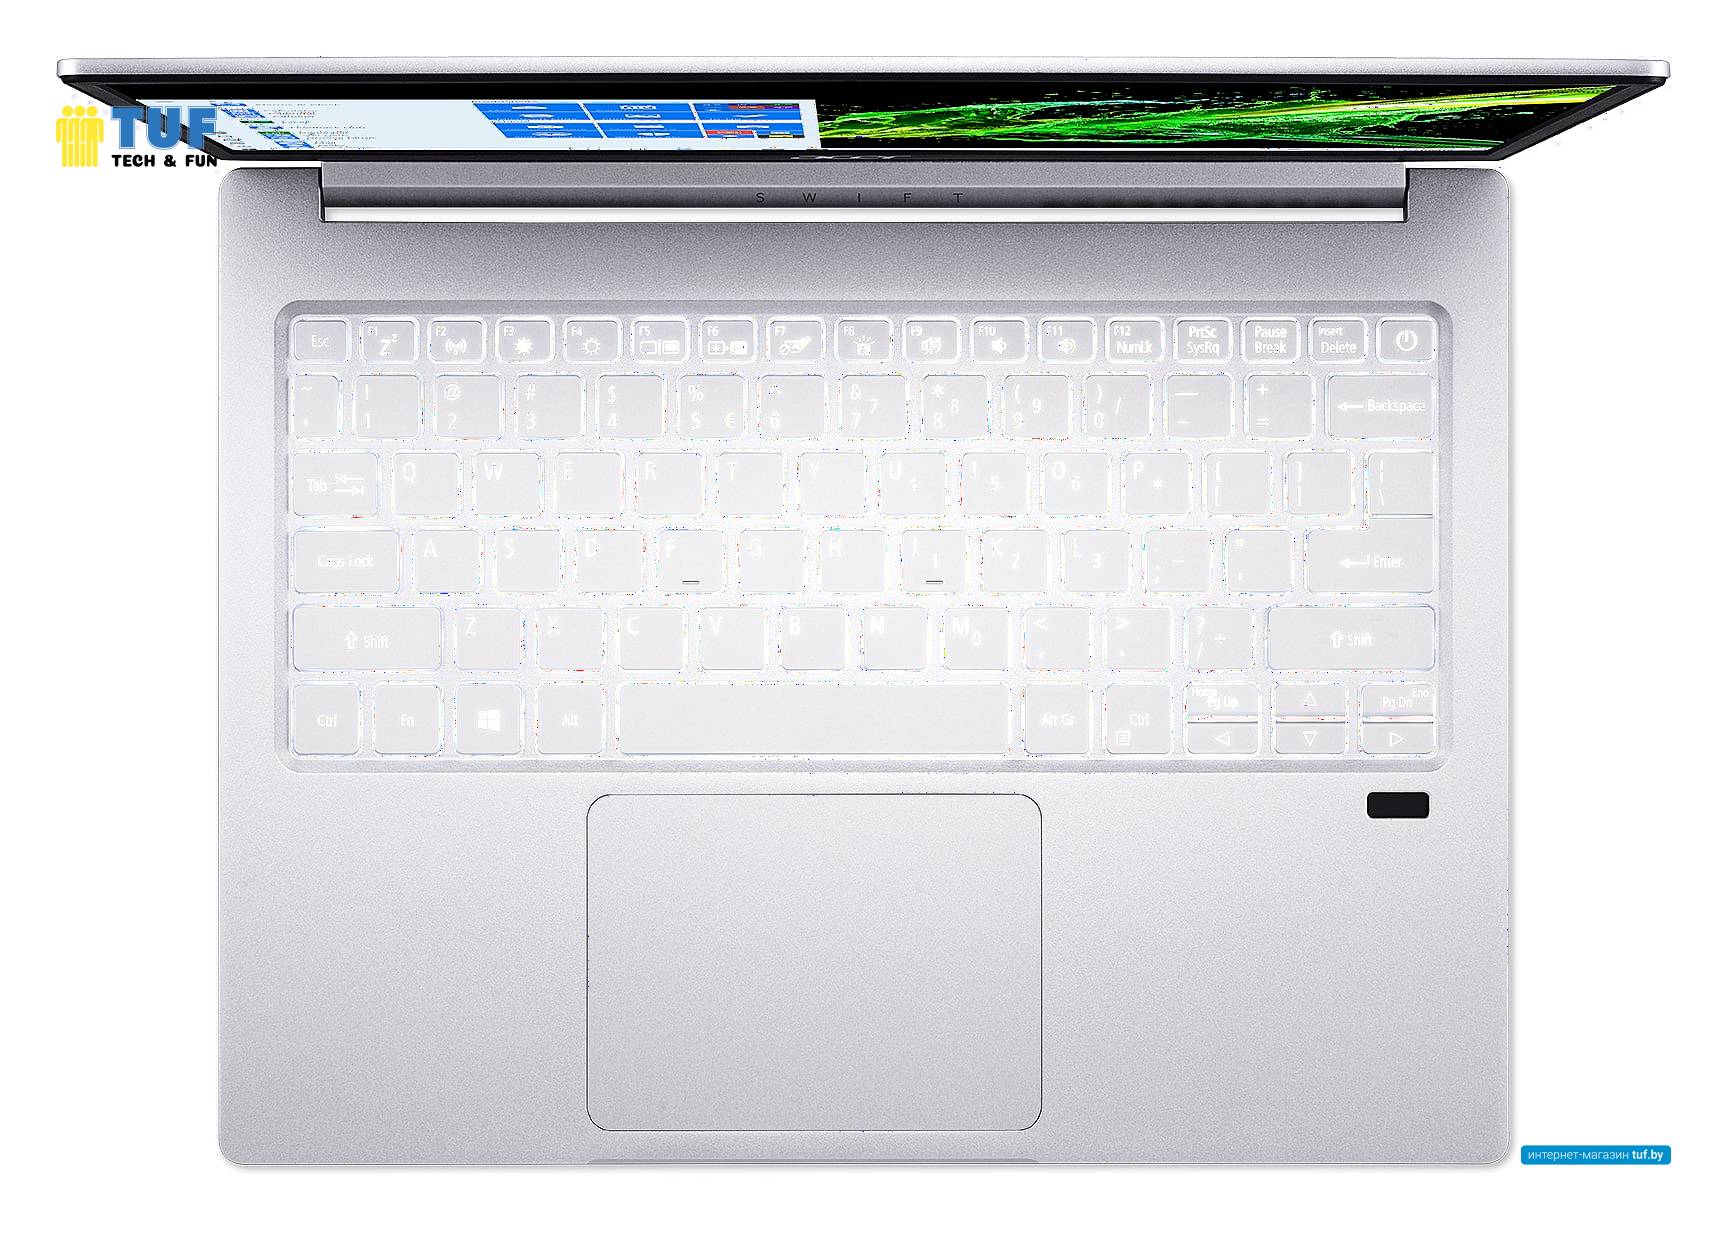 Ноутбук Acer Swift 3 SF313-52-53GG NX.HQWER.006